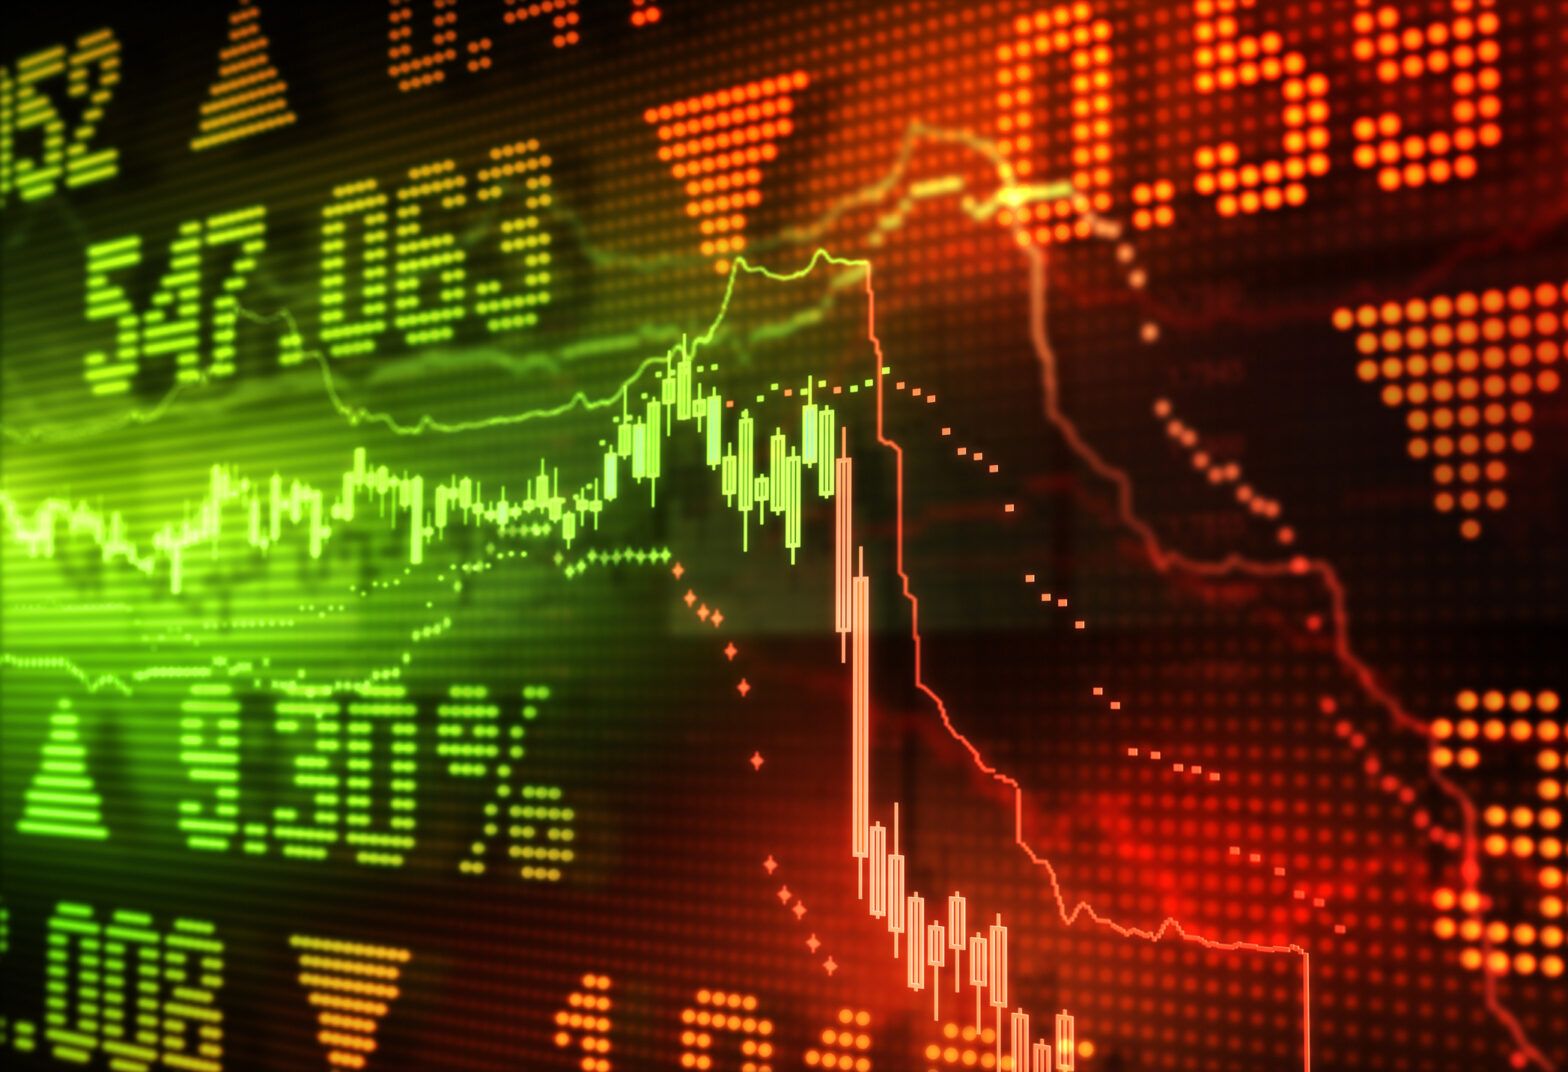 Can ESG disclosures reduce stock market shocks?